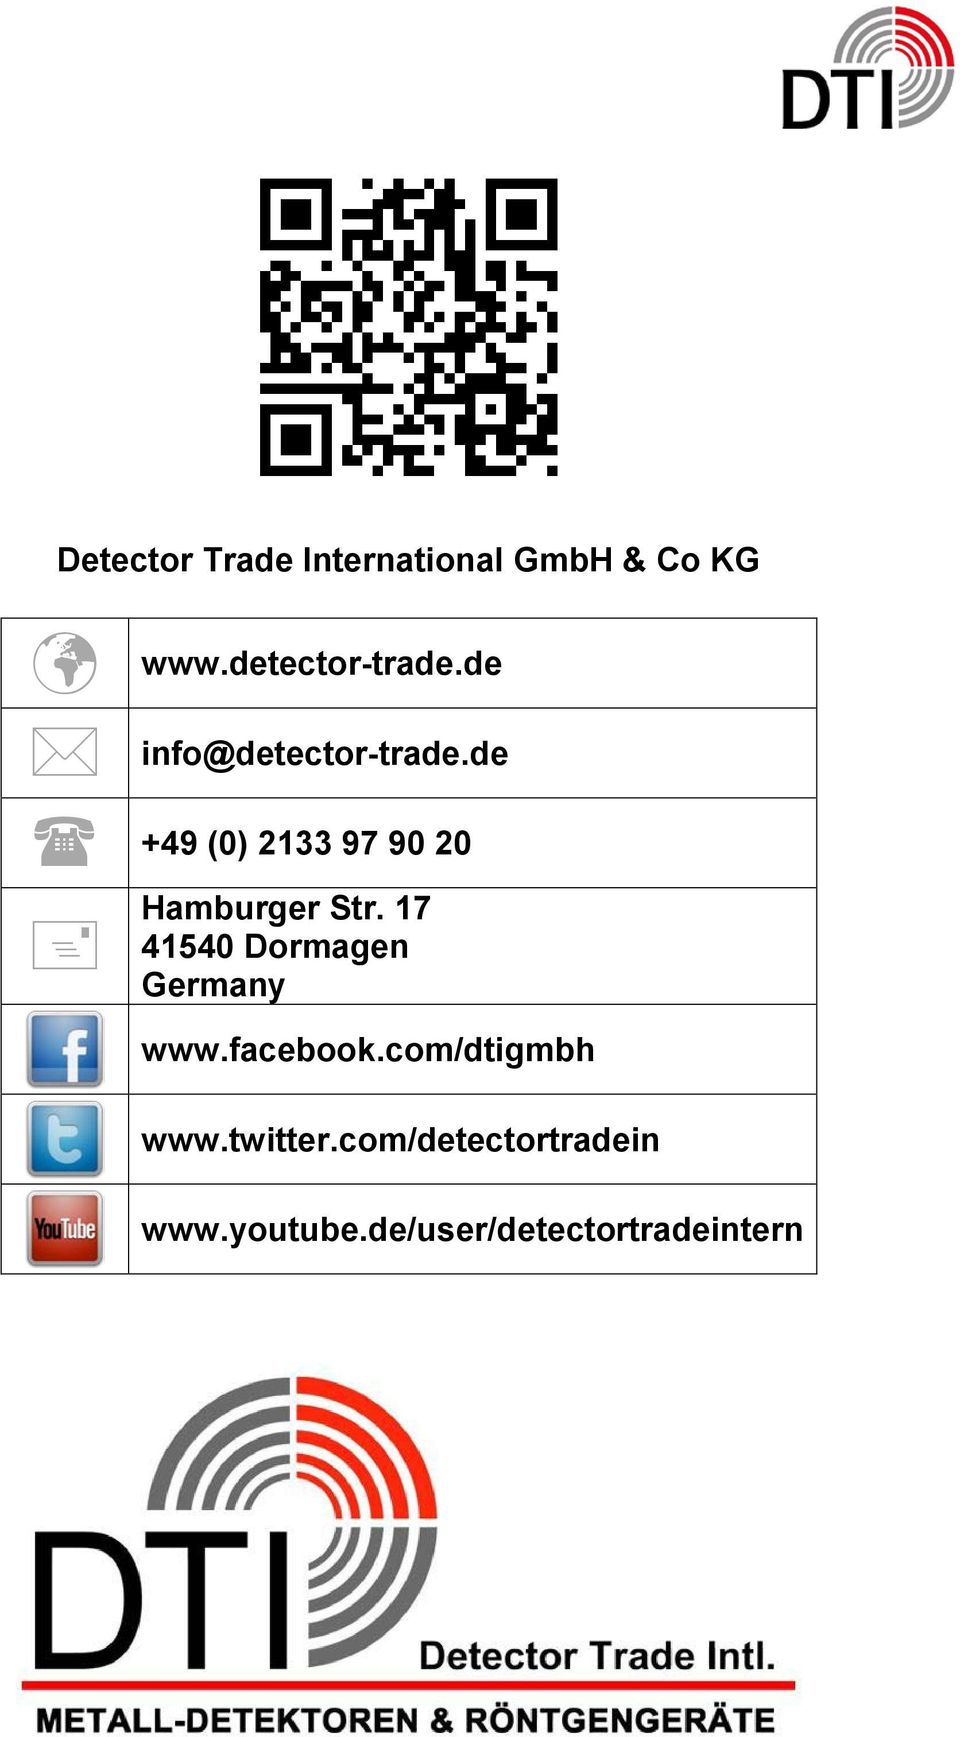 17 41540 Dormagen Germany www.facebook.com/dtigmbh www.